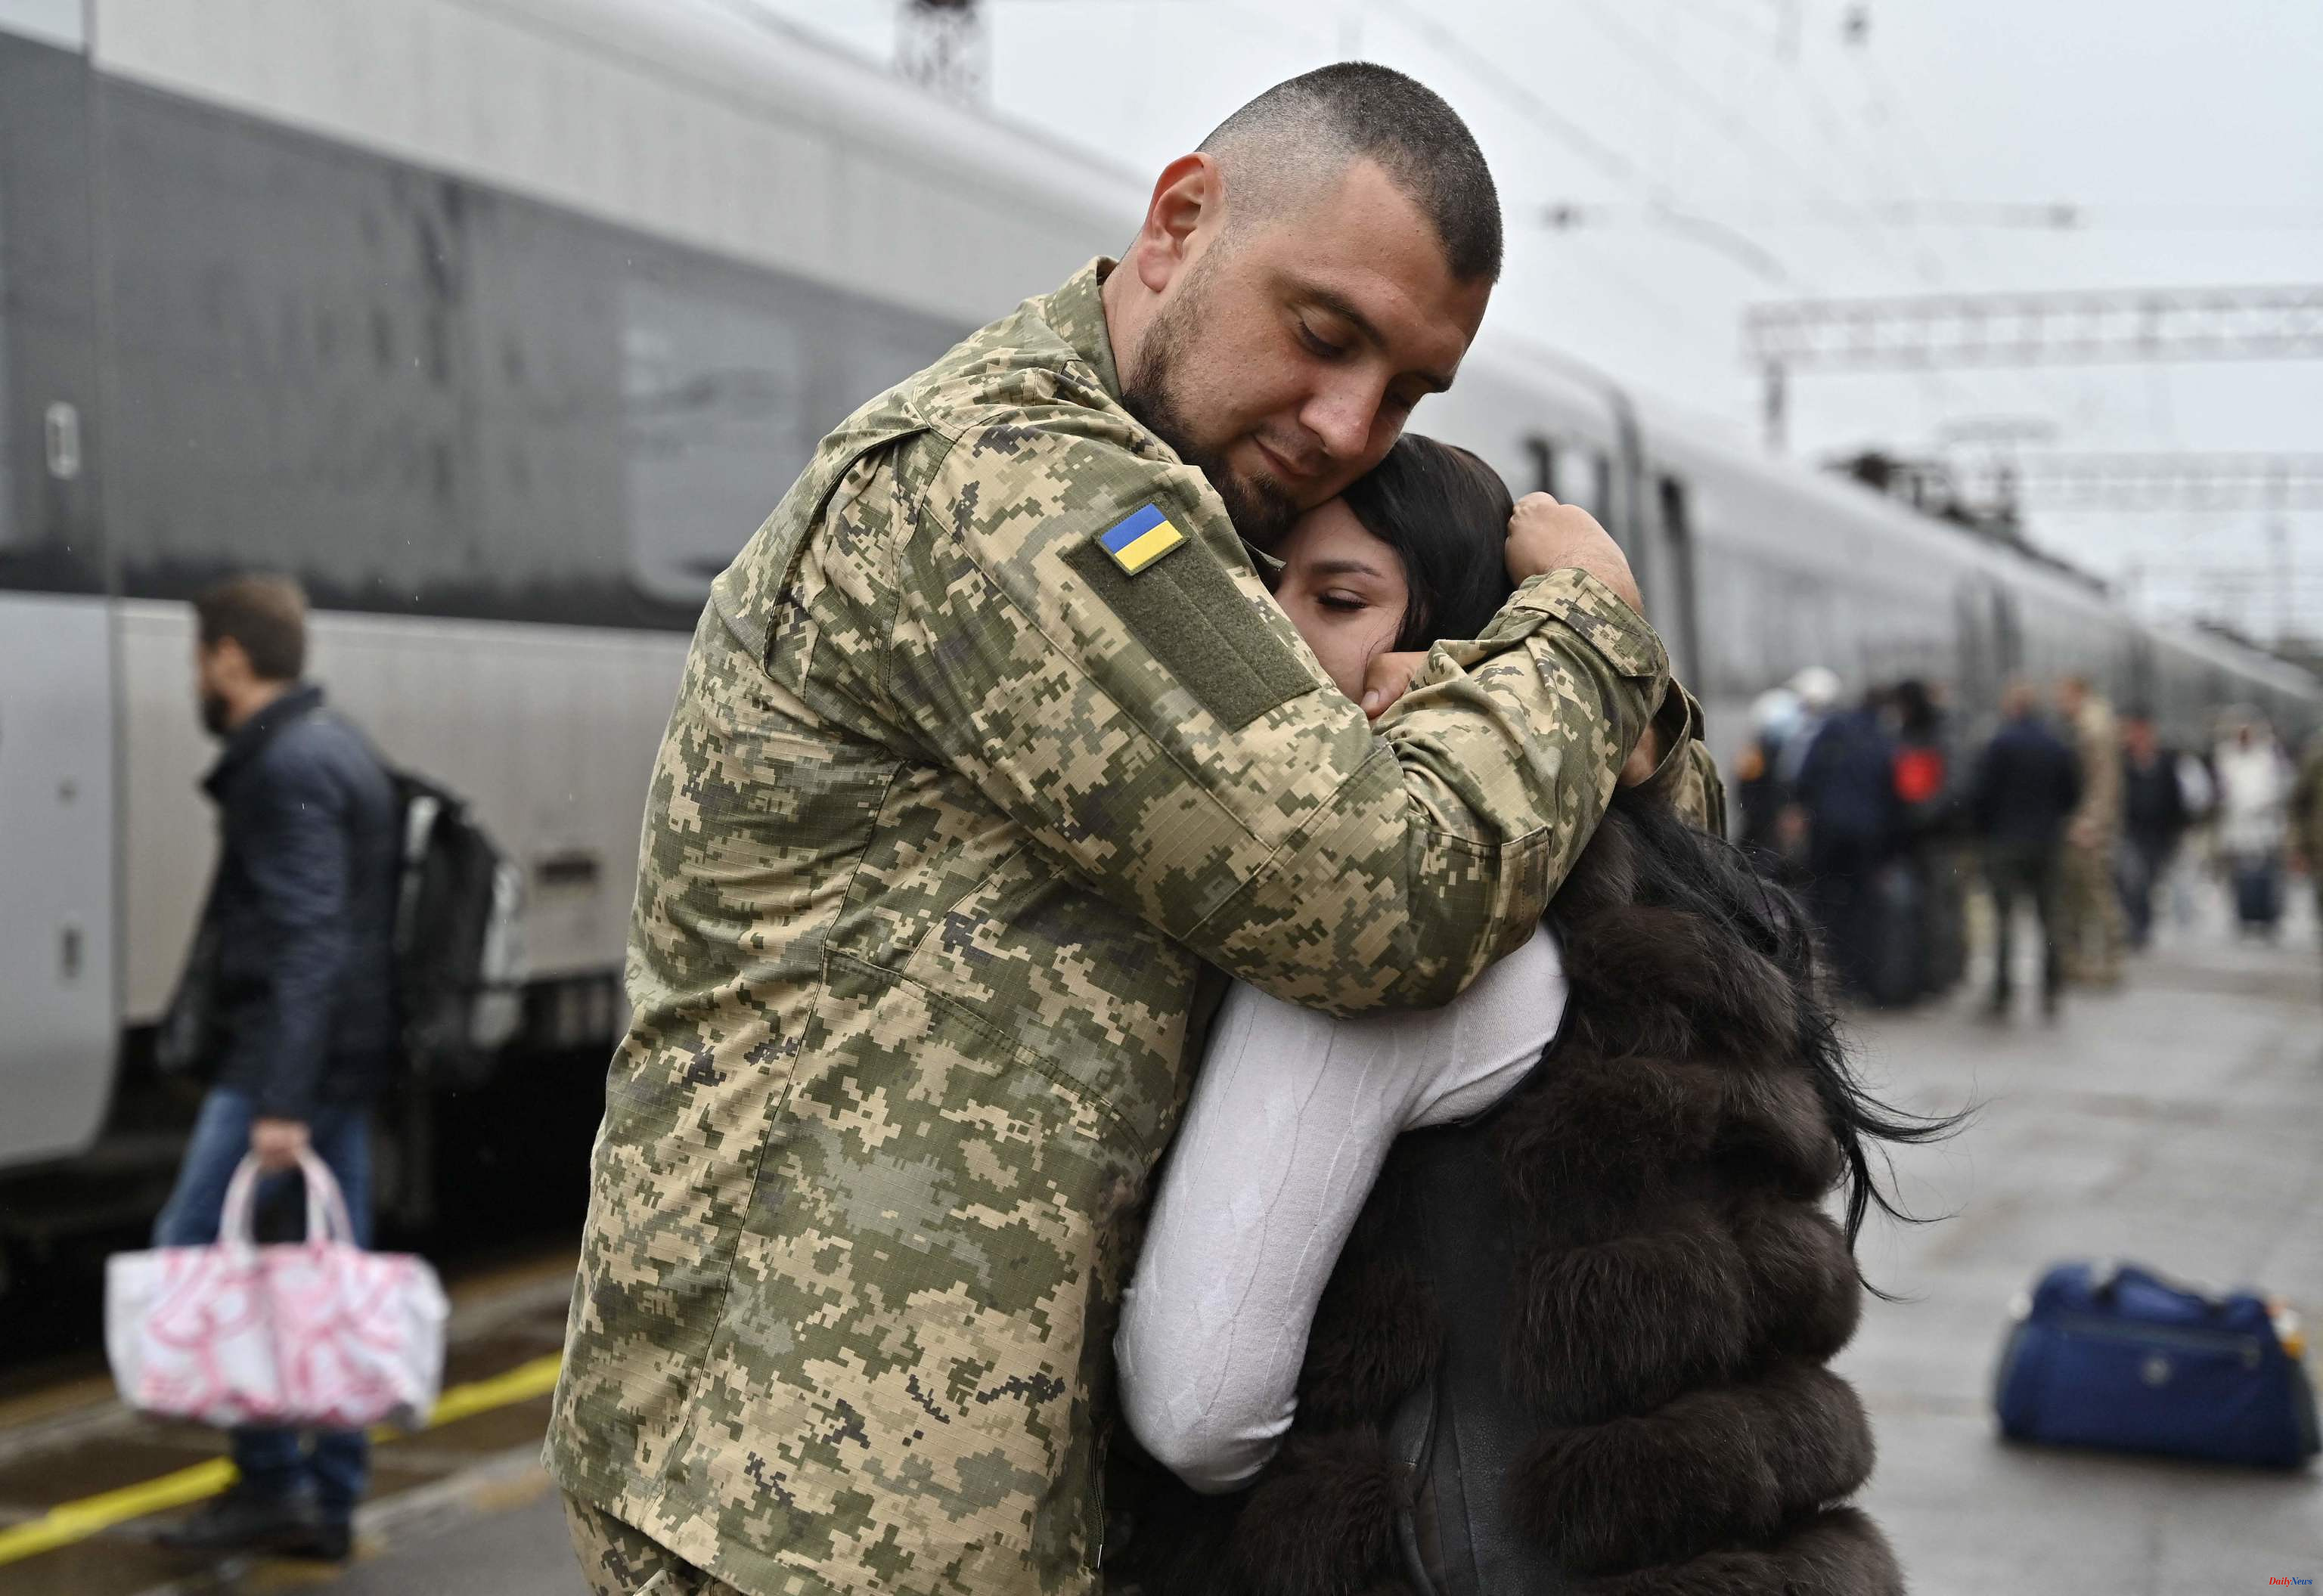 WAR IN UKRAINE The platform of tears near the front